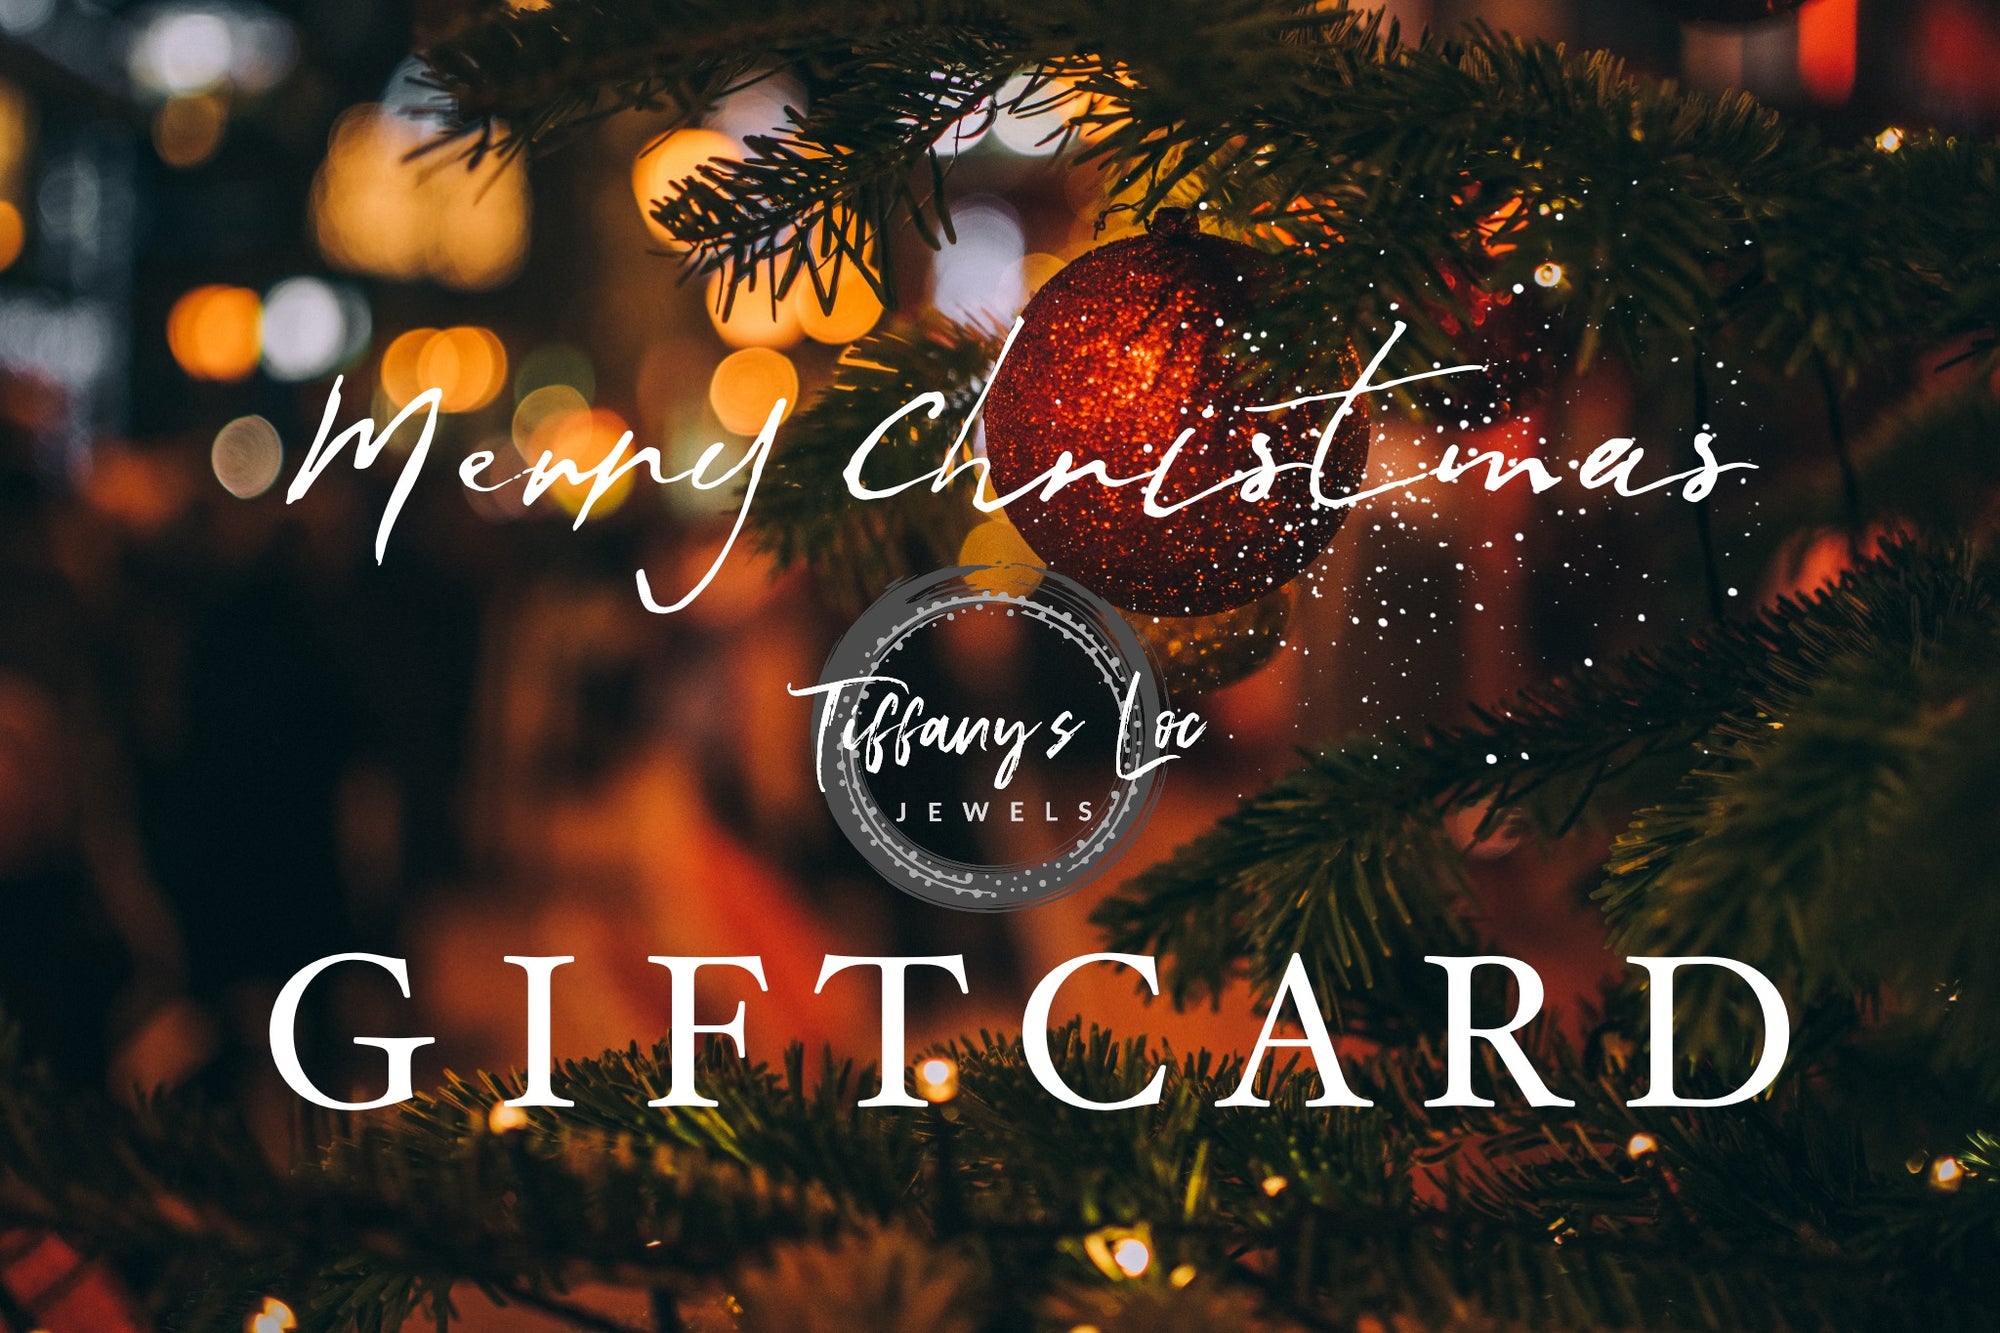 TIFFANY'S LOC JEWELS CHRISTMAS GIFT CARD